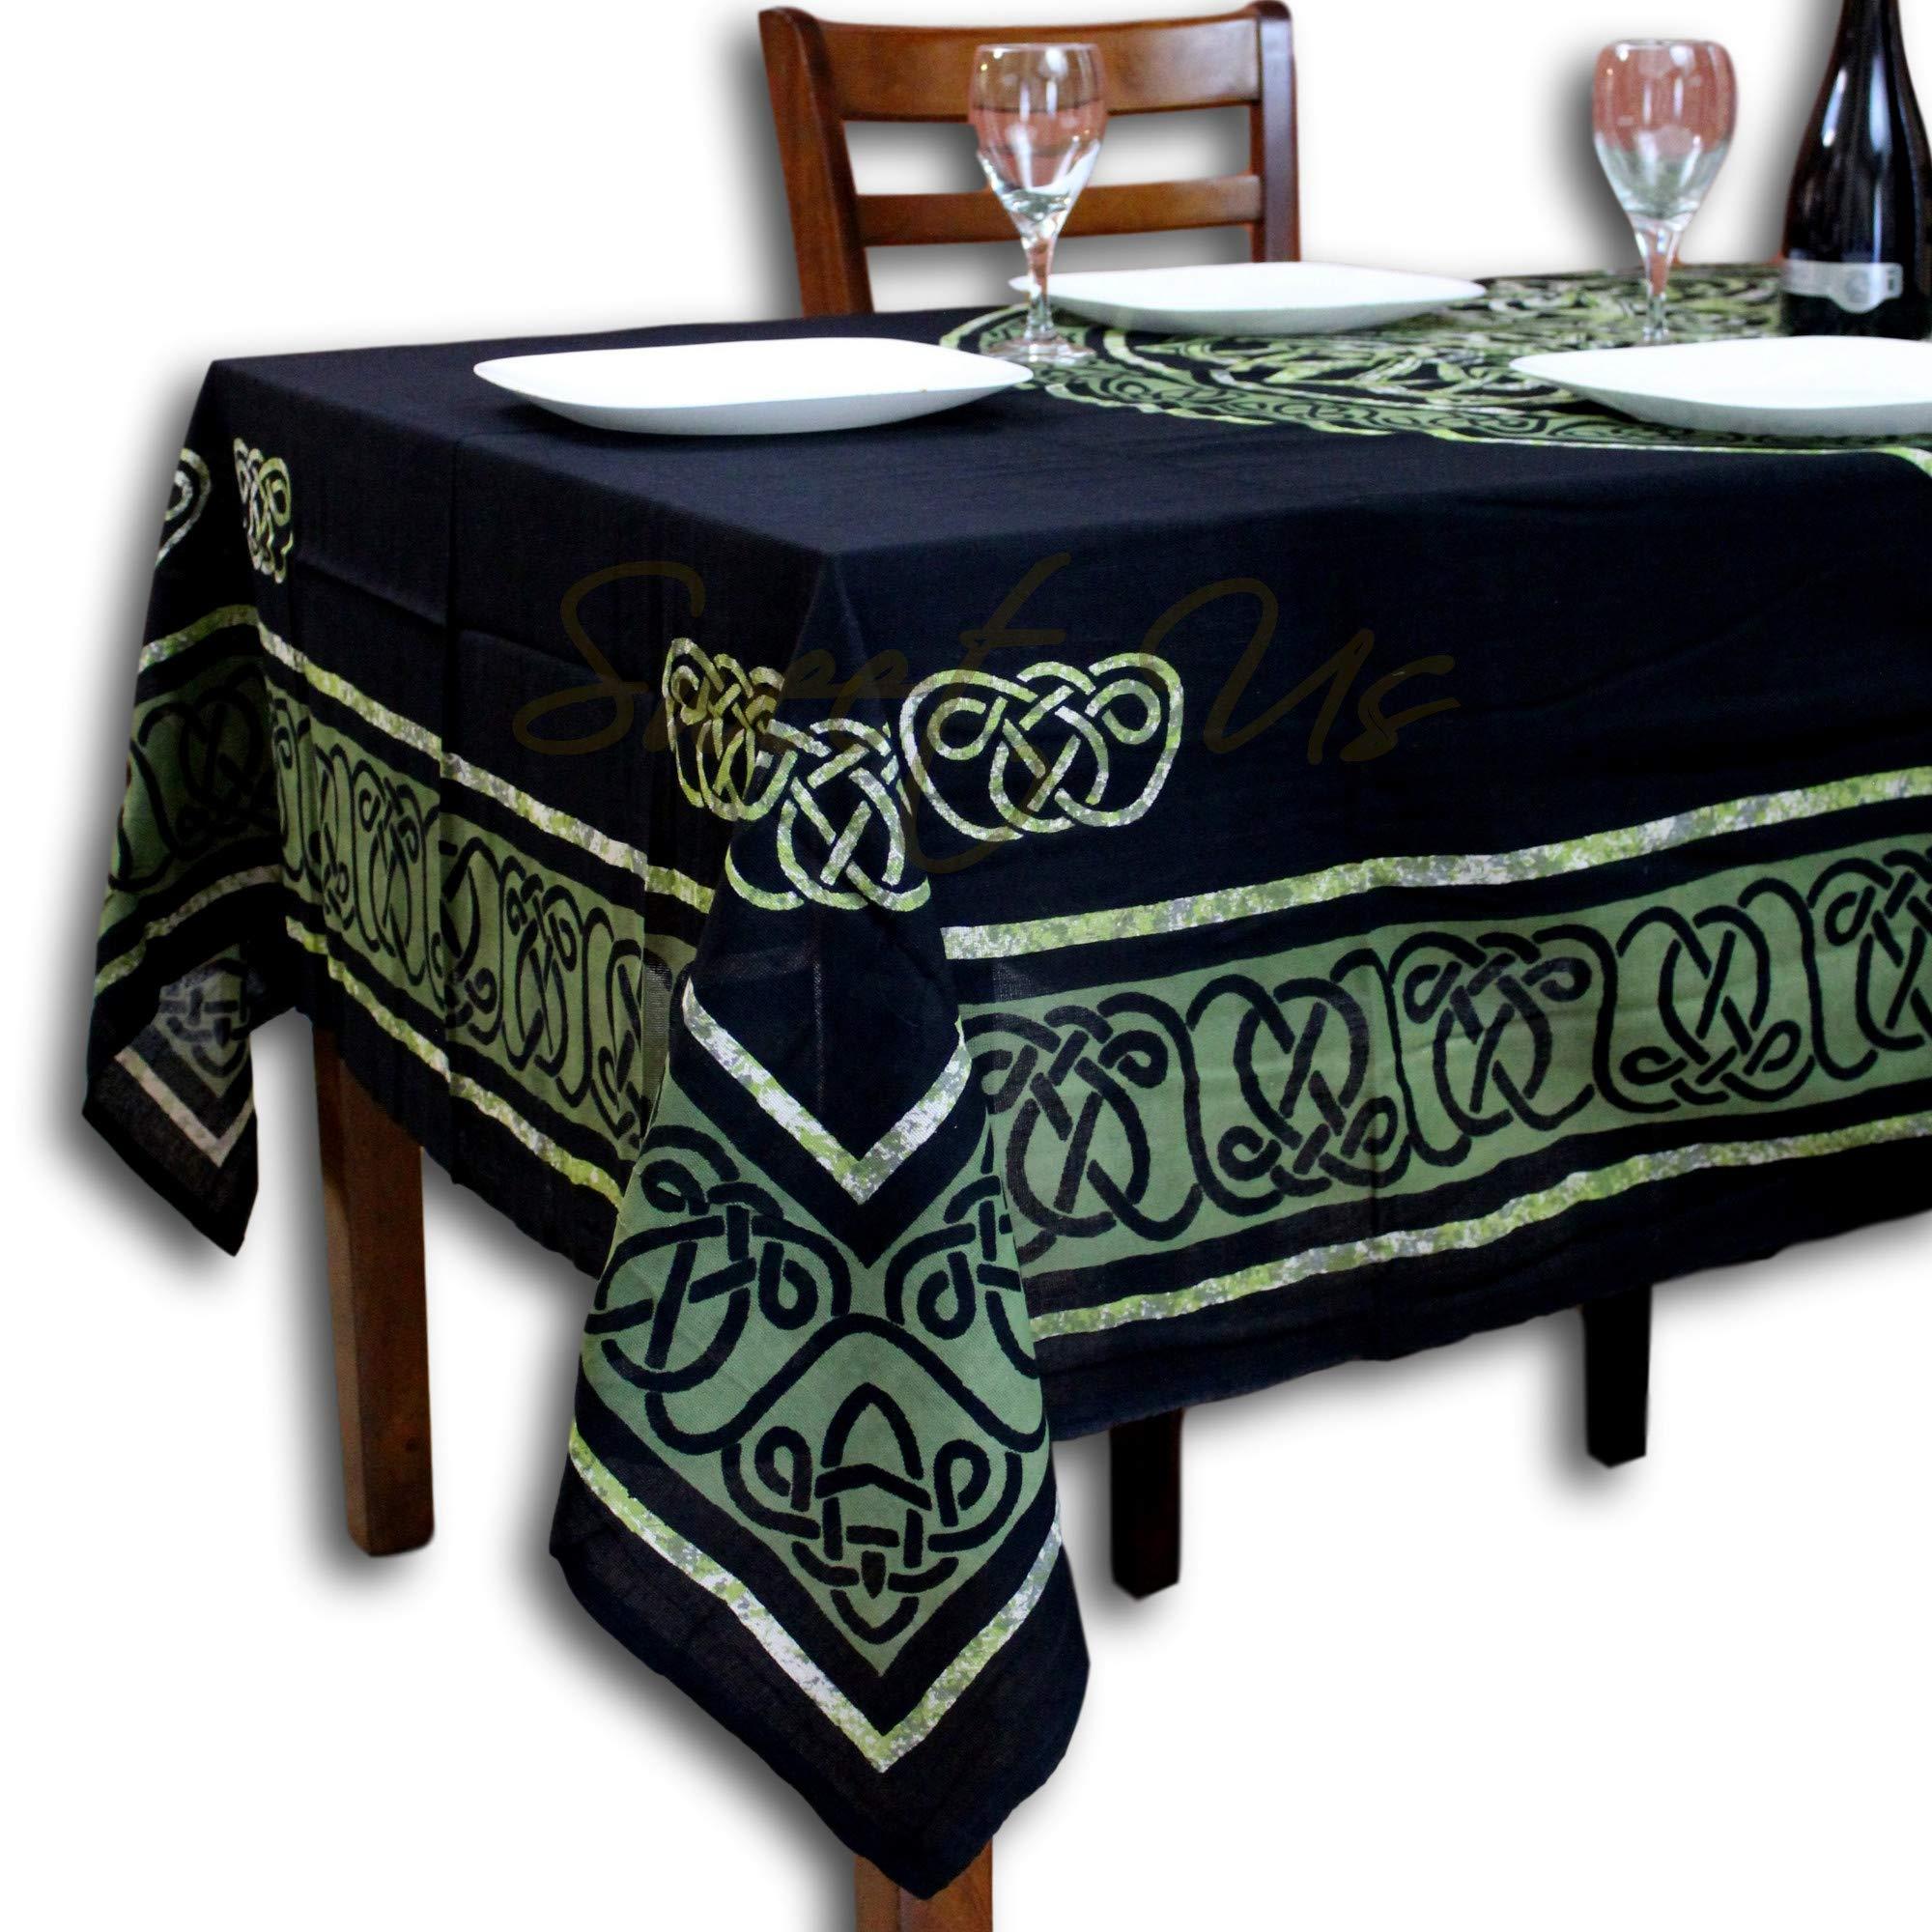 India Arts Celtic Circular Knot Print Cotton Tablecloth Rectangle 70x104 inches Black Green